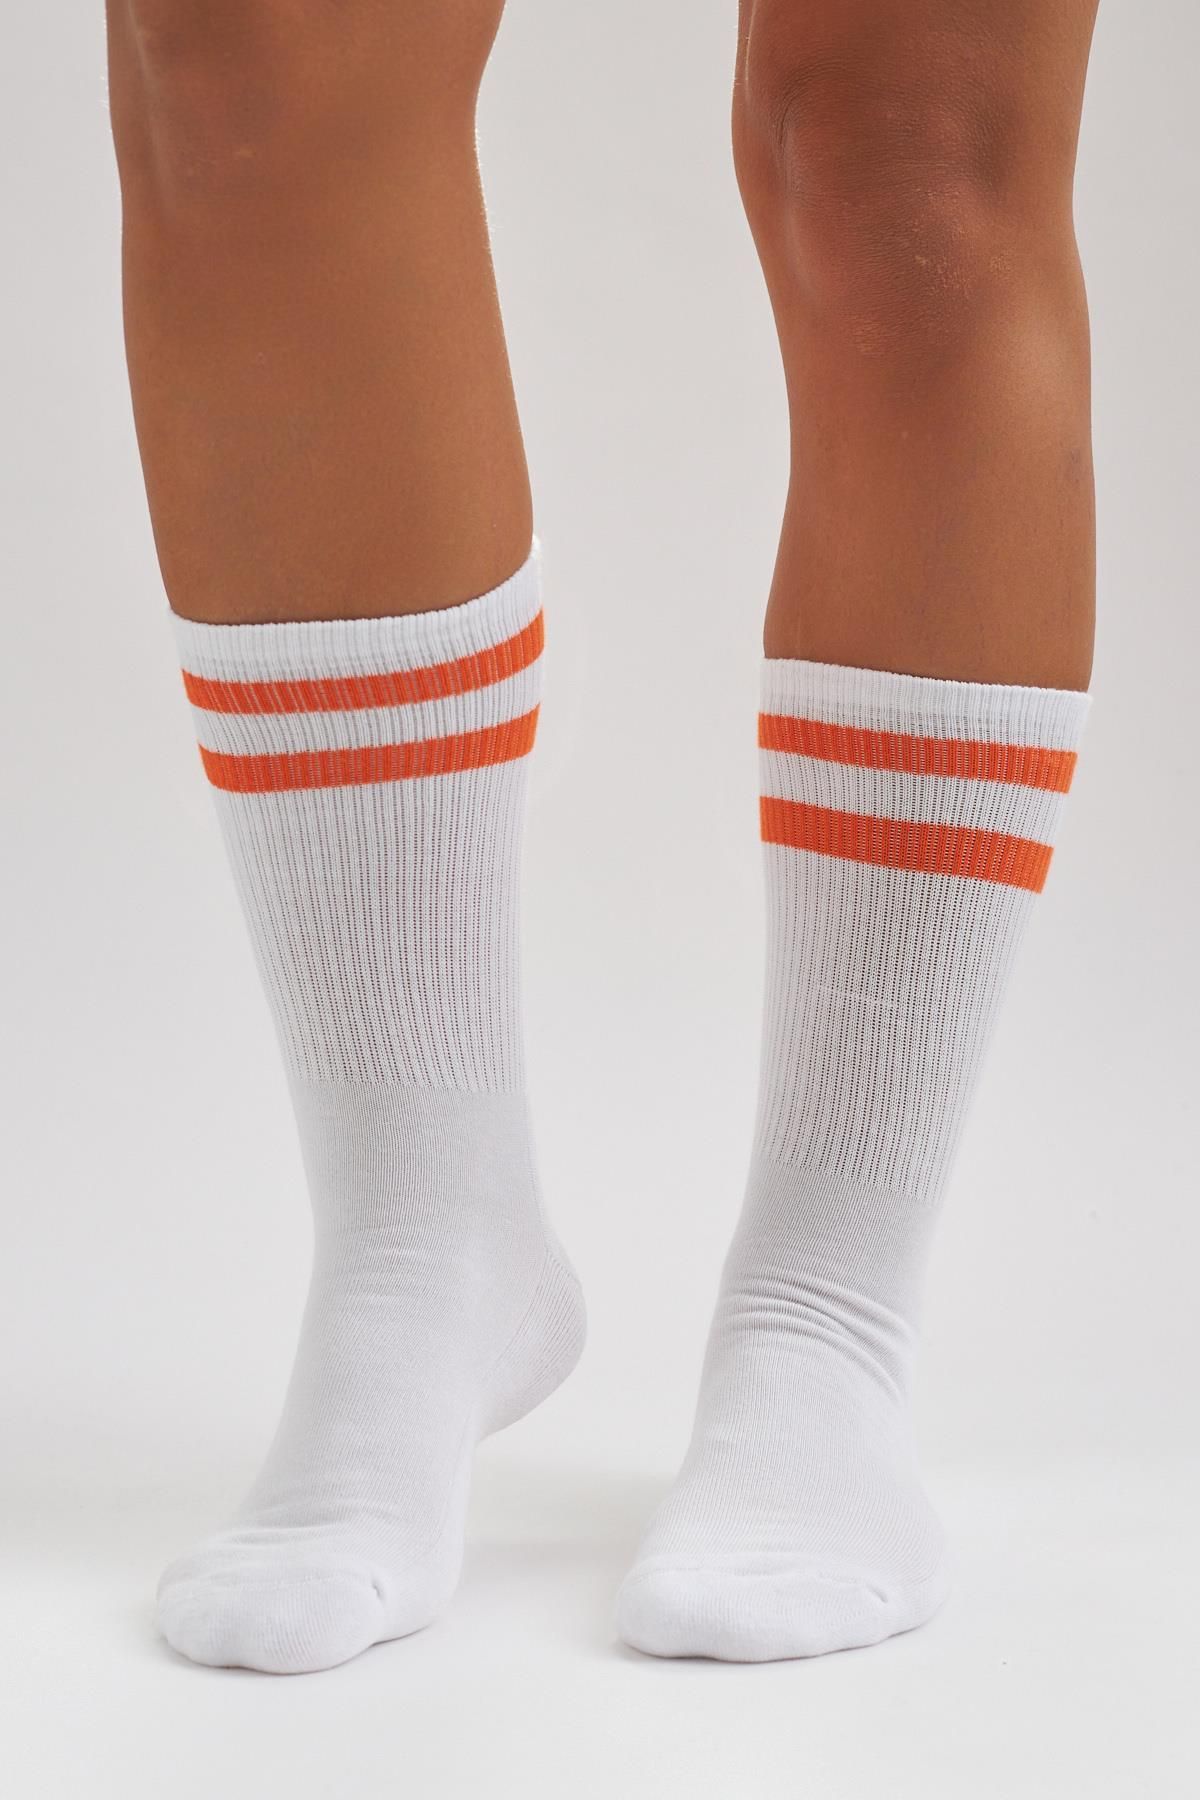 Striped White/Orange Knee High Socks